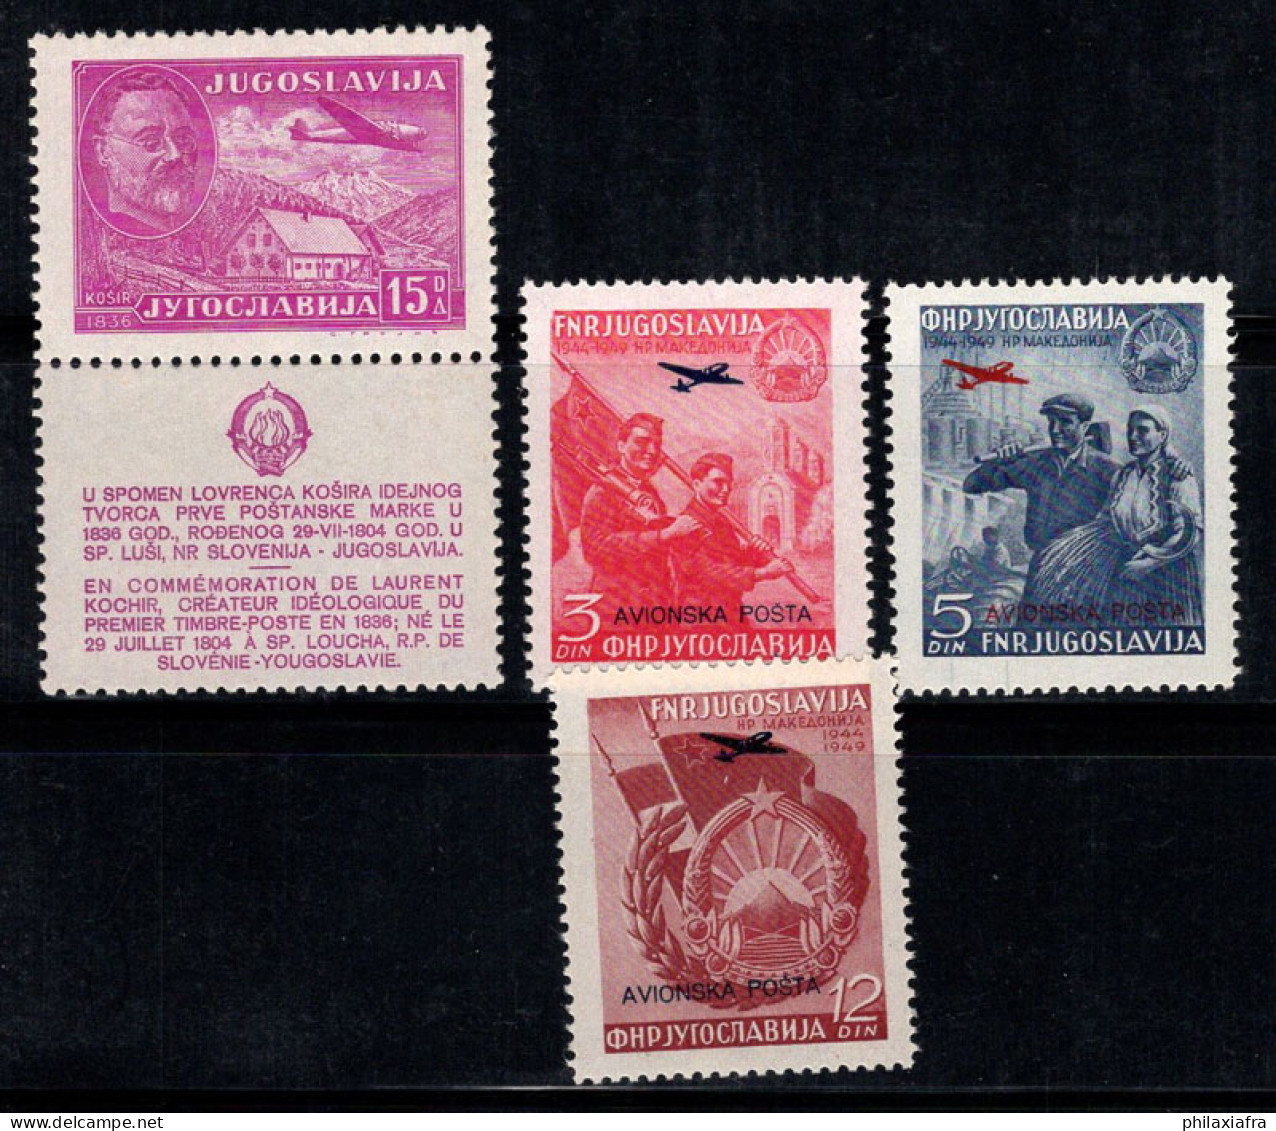 Yougoslavie 1948 Mi. 556, 575-577 Neuf ** 100% Poste Aérienne Kosir, AVIONSKA - Aéreo